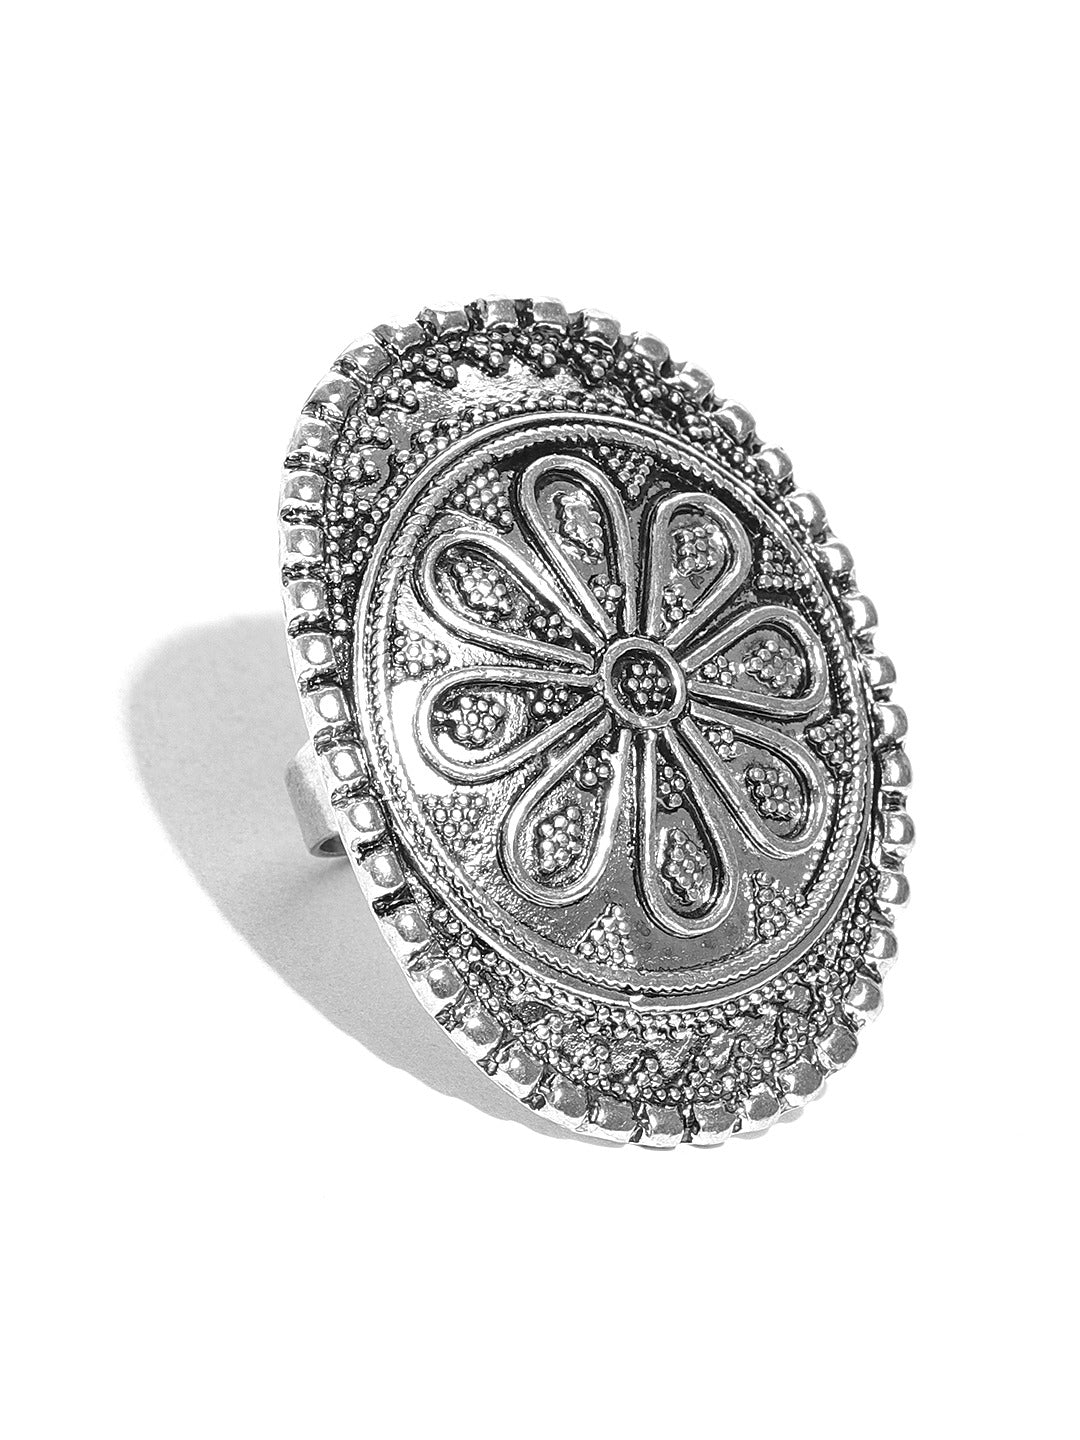 Oxidised Silver-Toned Textured Adjustable Ring